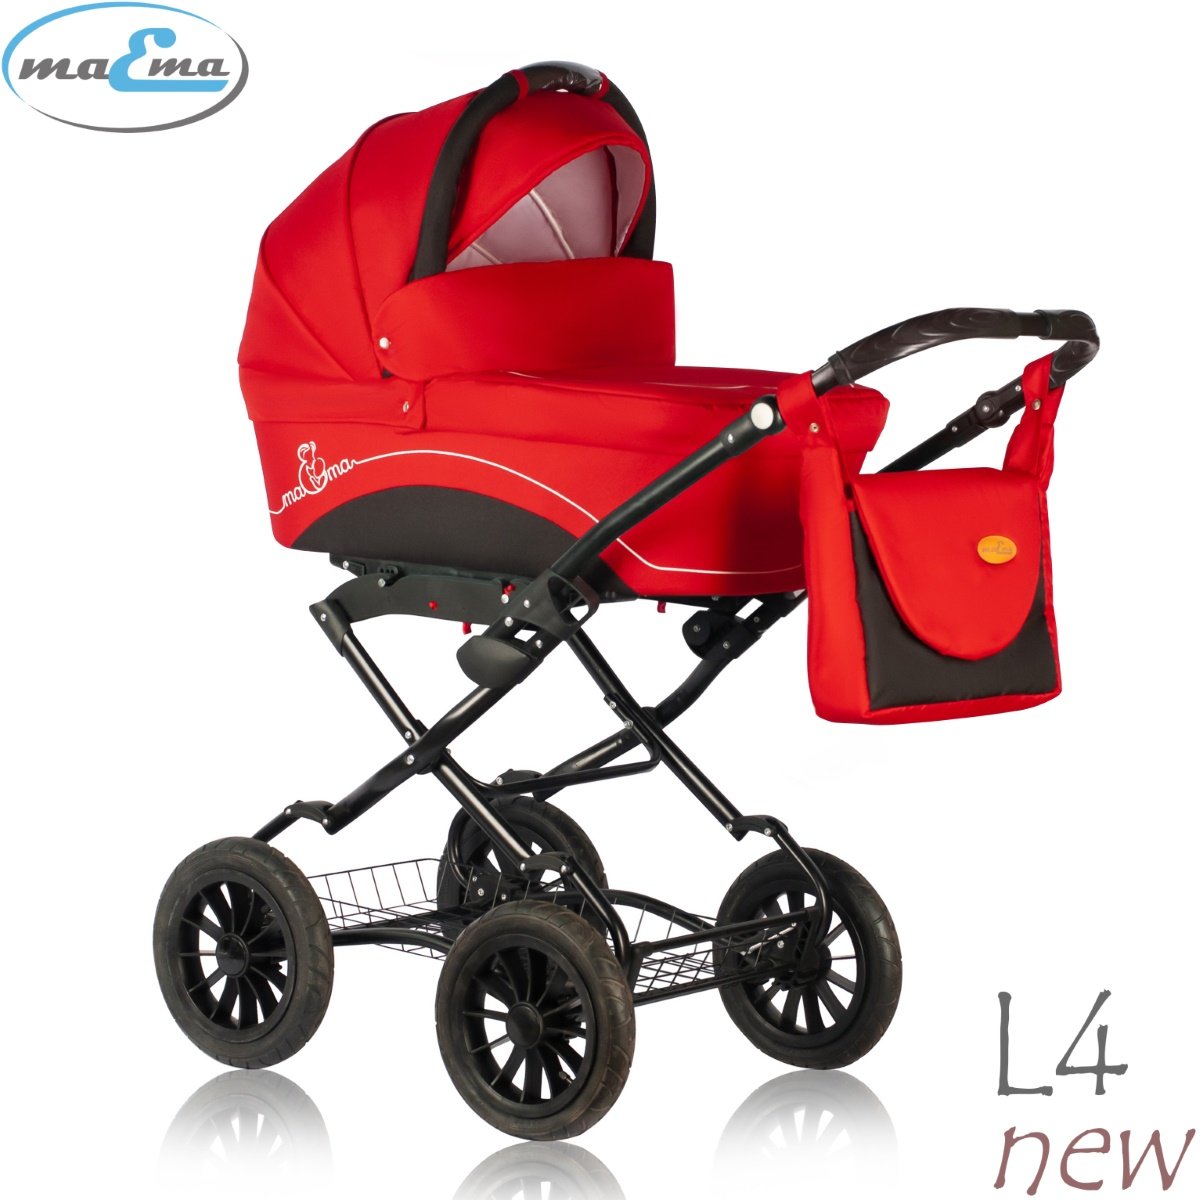 Maema Lika Classic L4 New Bērnu rati 3in1